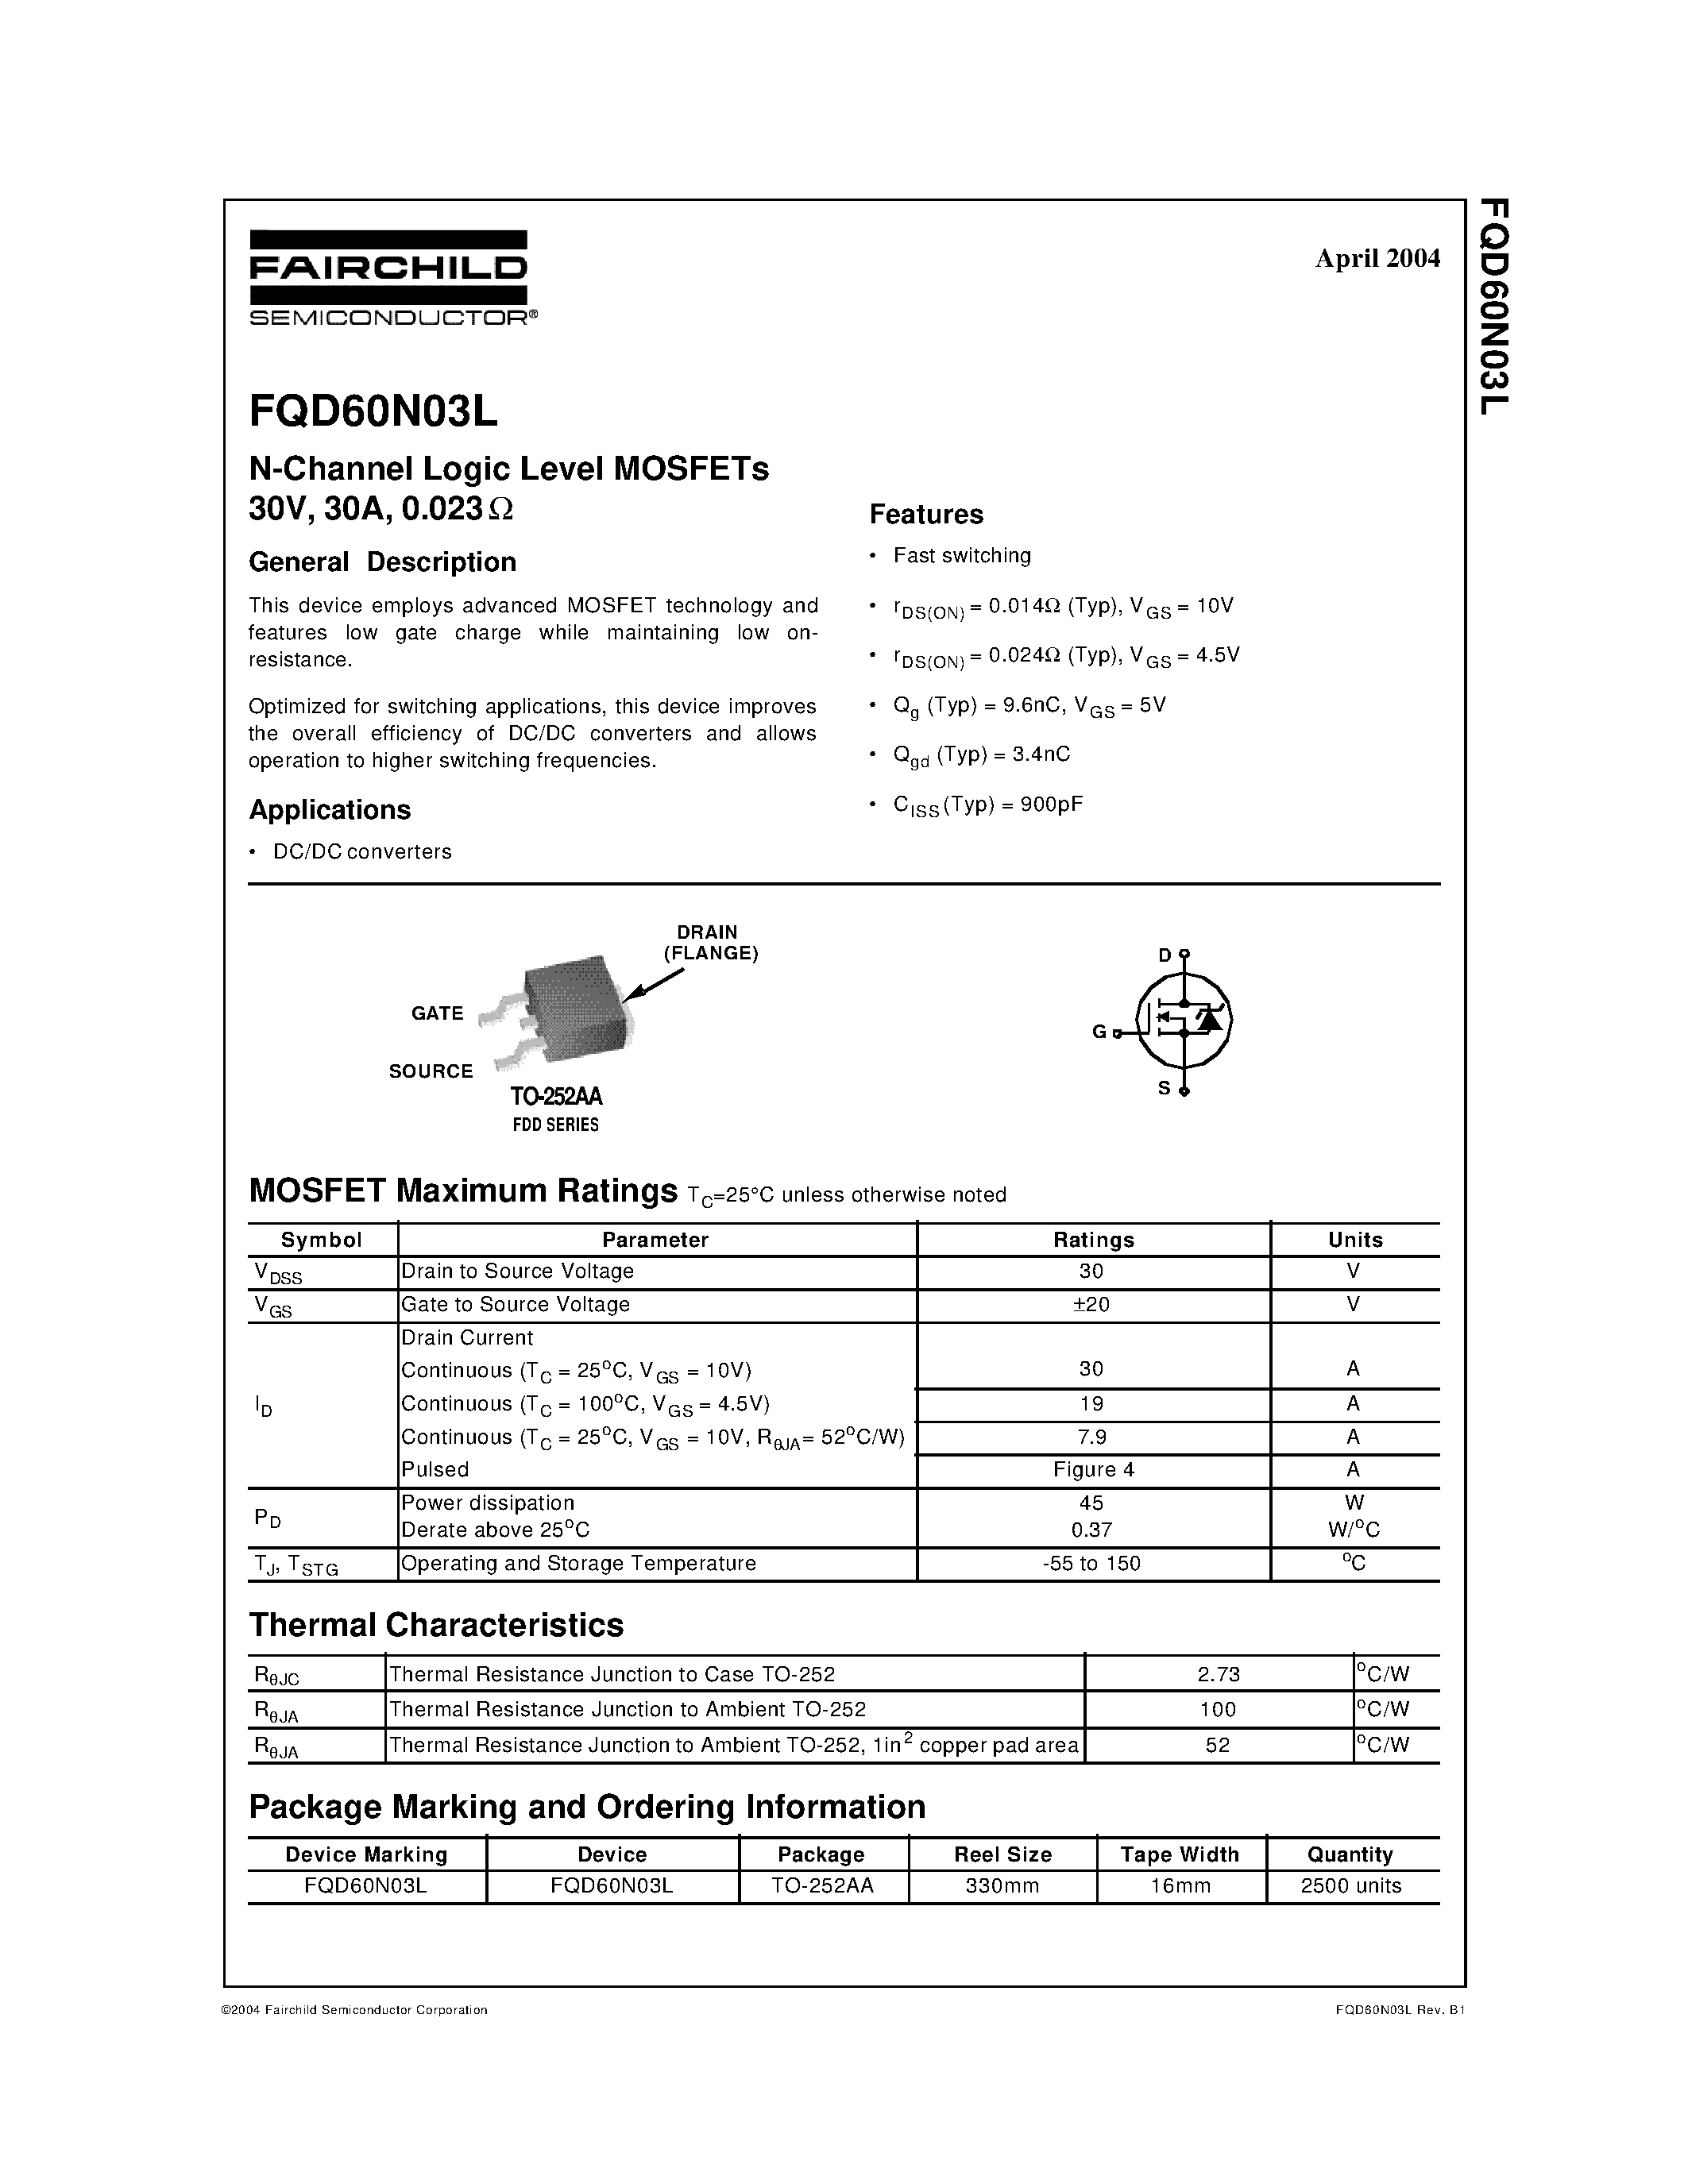 Datasheet FQD60N03L - N-Channel Logic Level MOSFETs 30V/ 30A/ 0.023ohm page 1